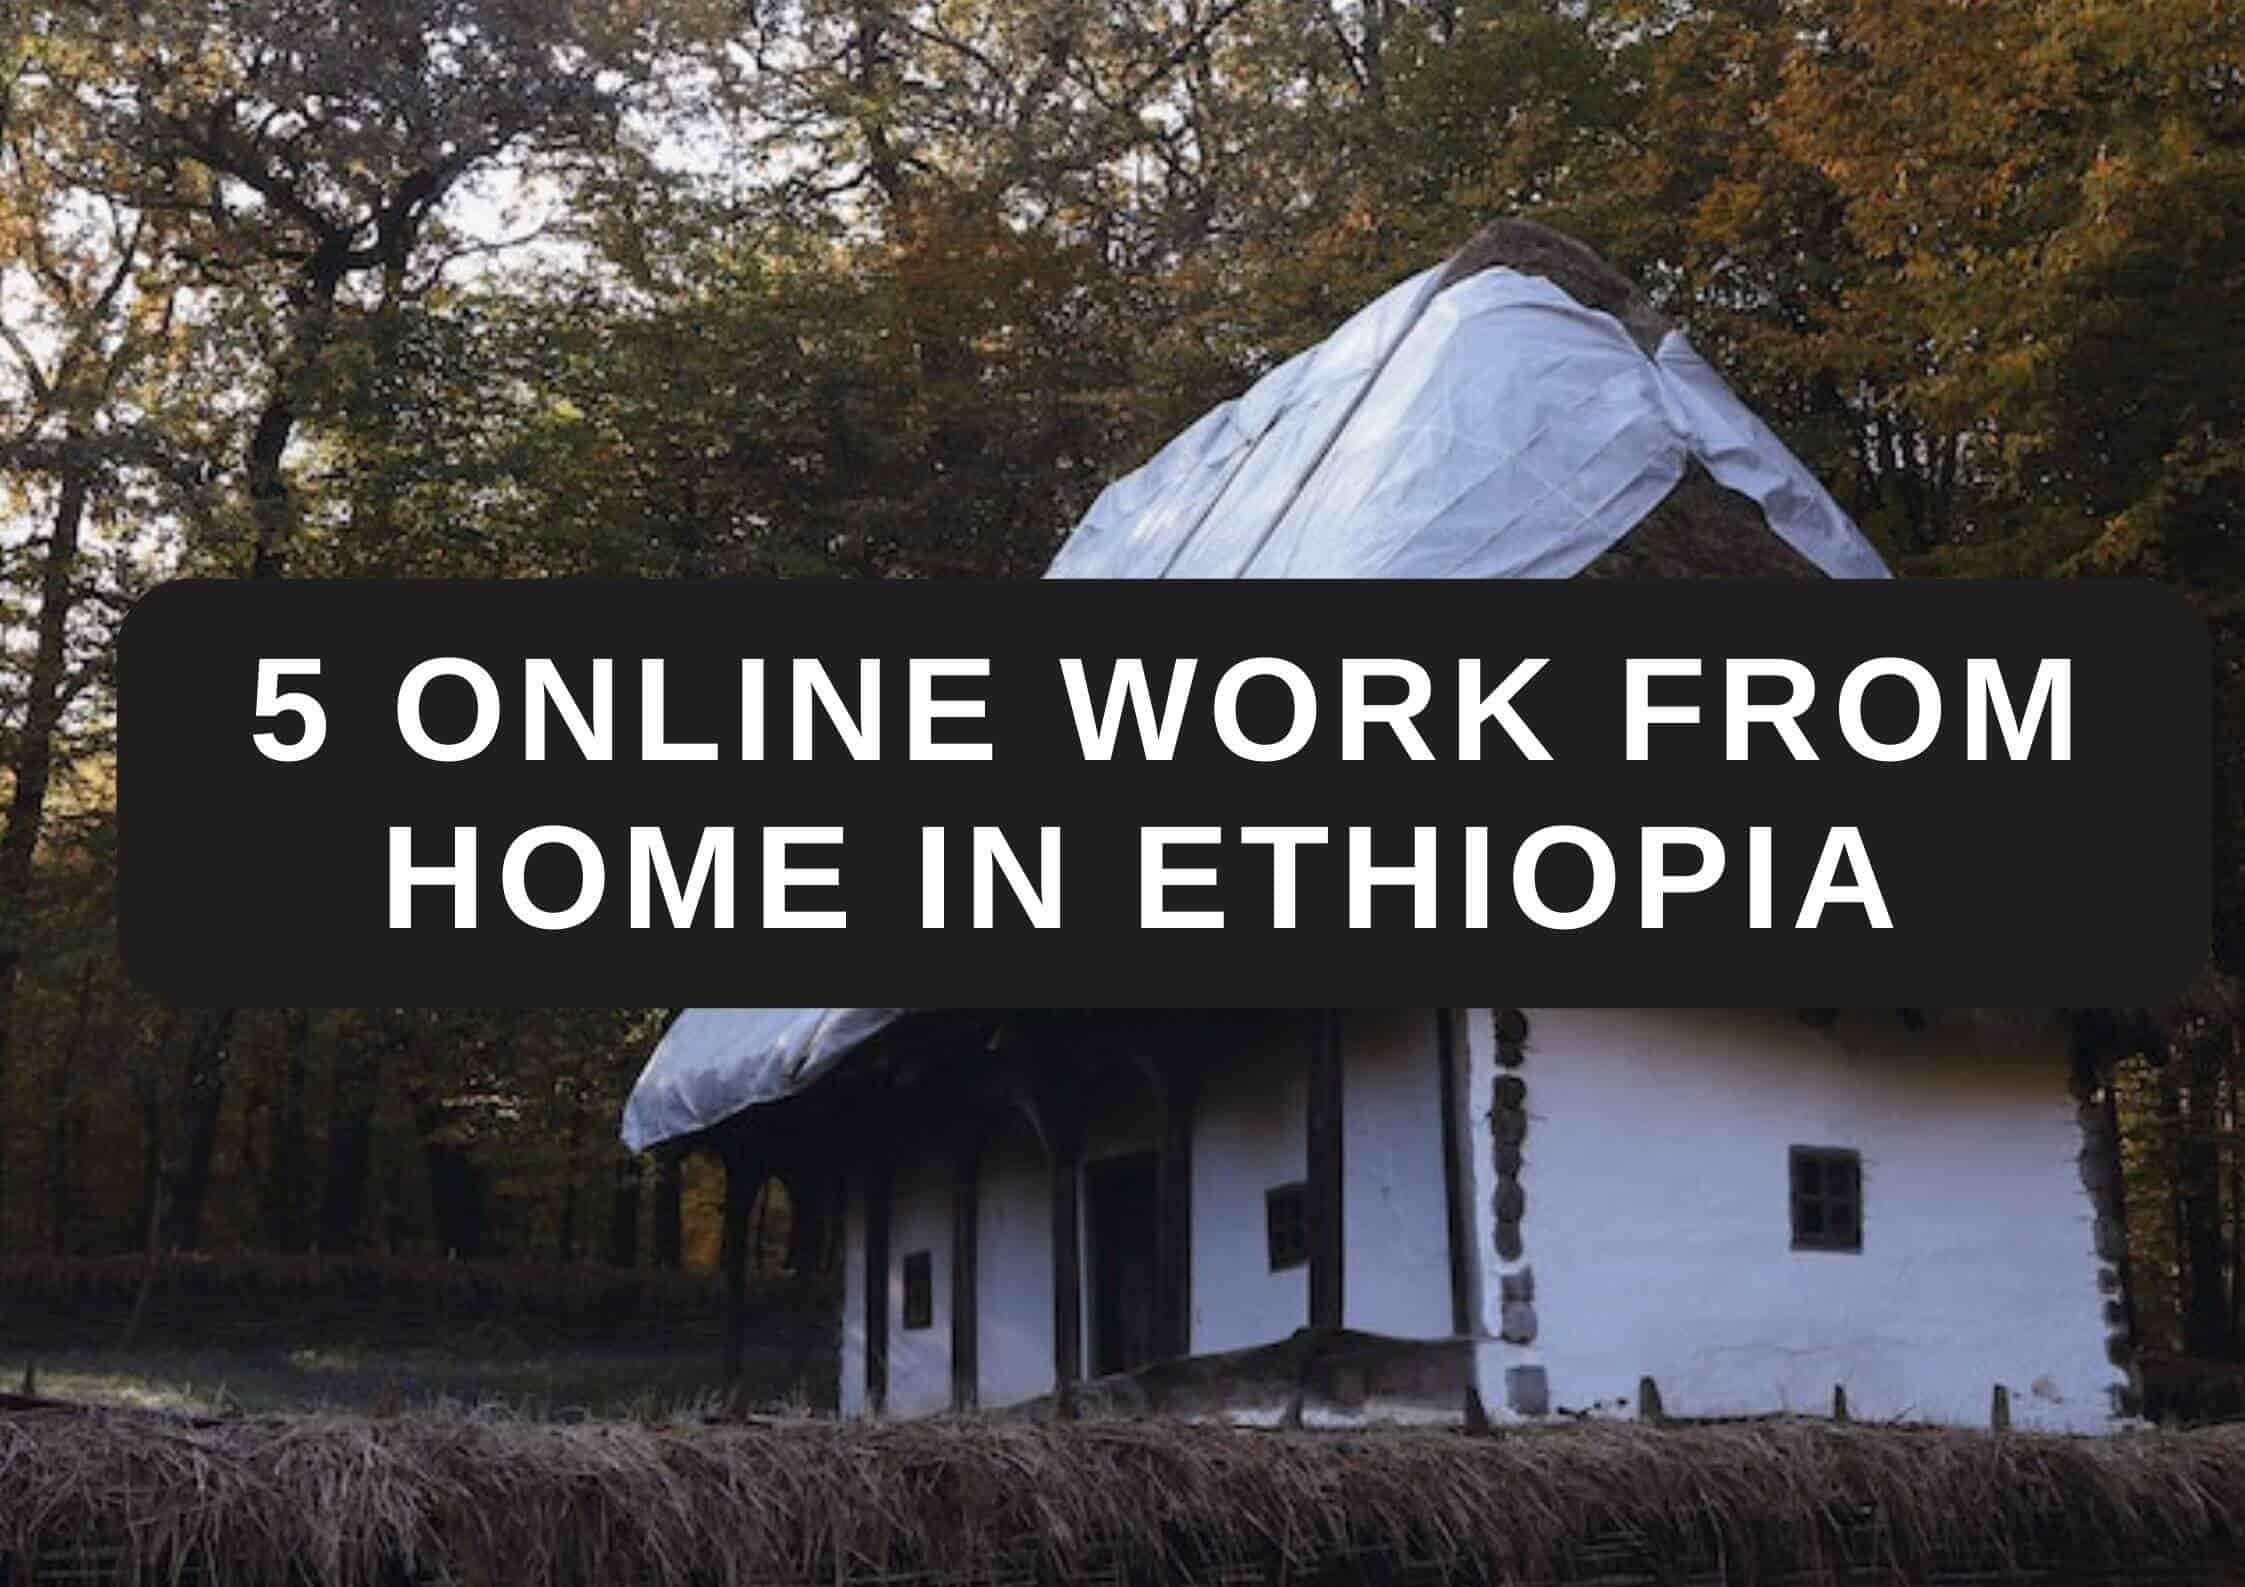 5 Online Work from Home in Ethiopia (ኦንላይን ስራ በኢትዮፕይ)